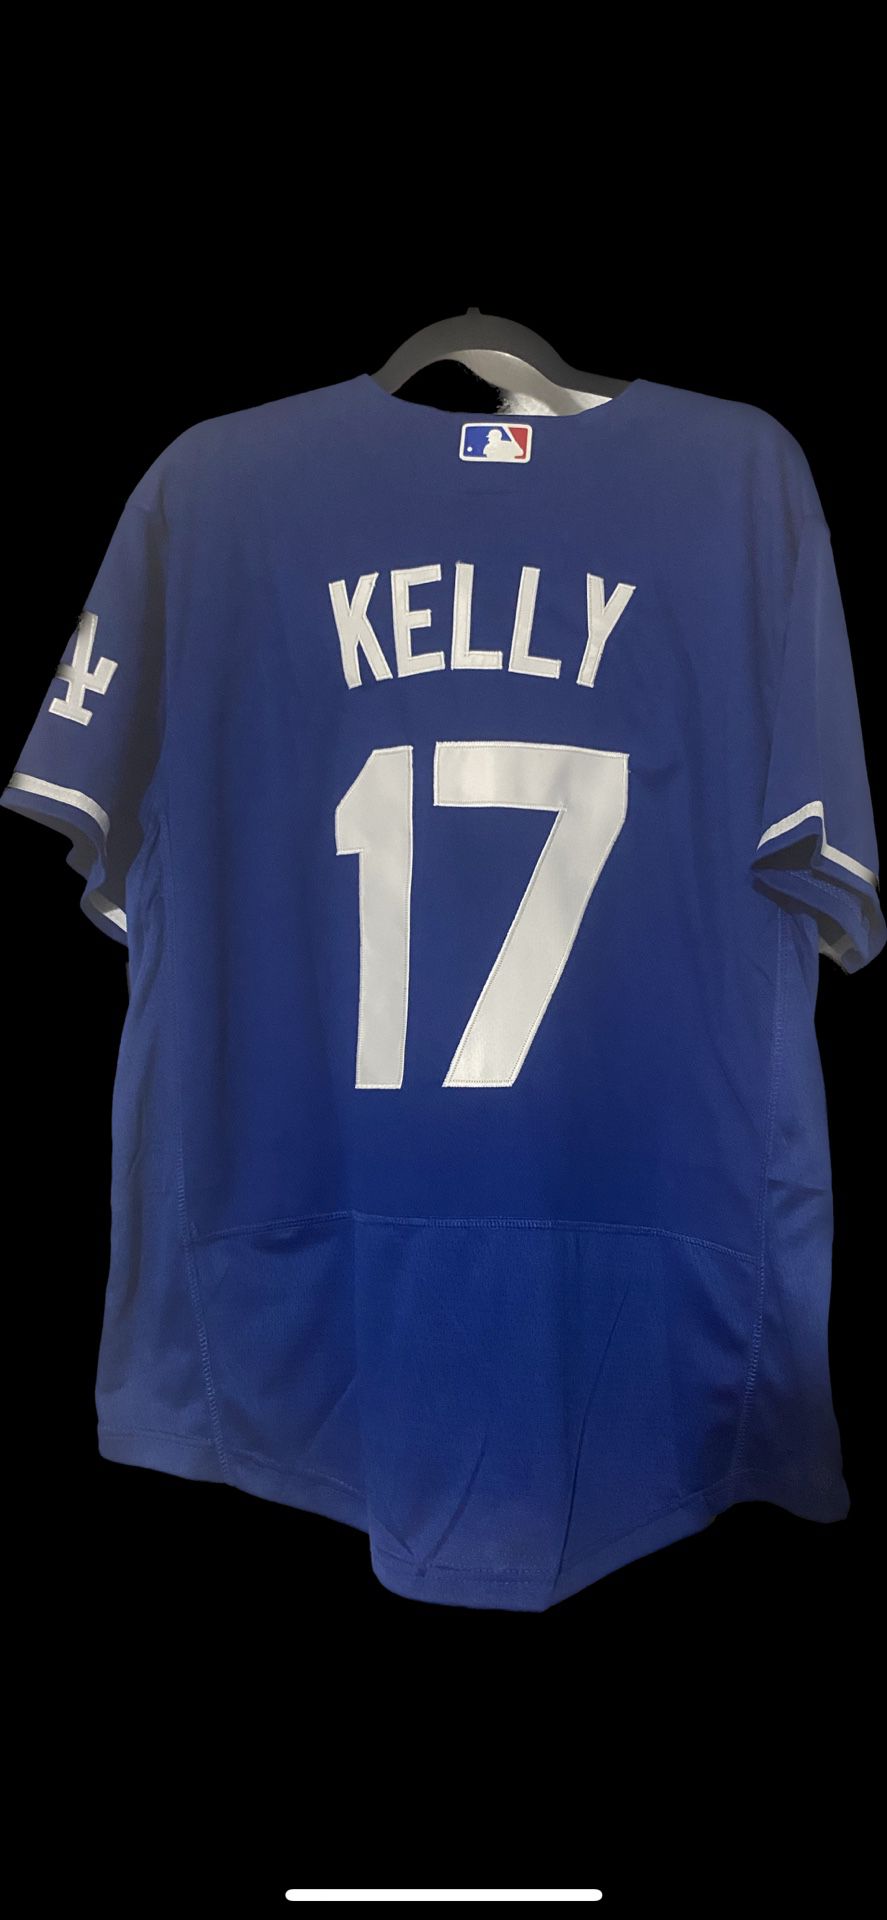 Dodgers Joe Kelly And Kiké Hernandez Jerseys Small-7X See